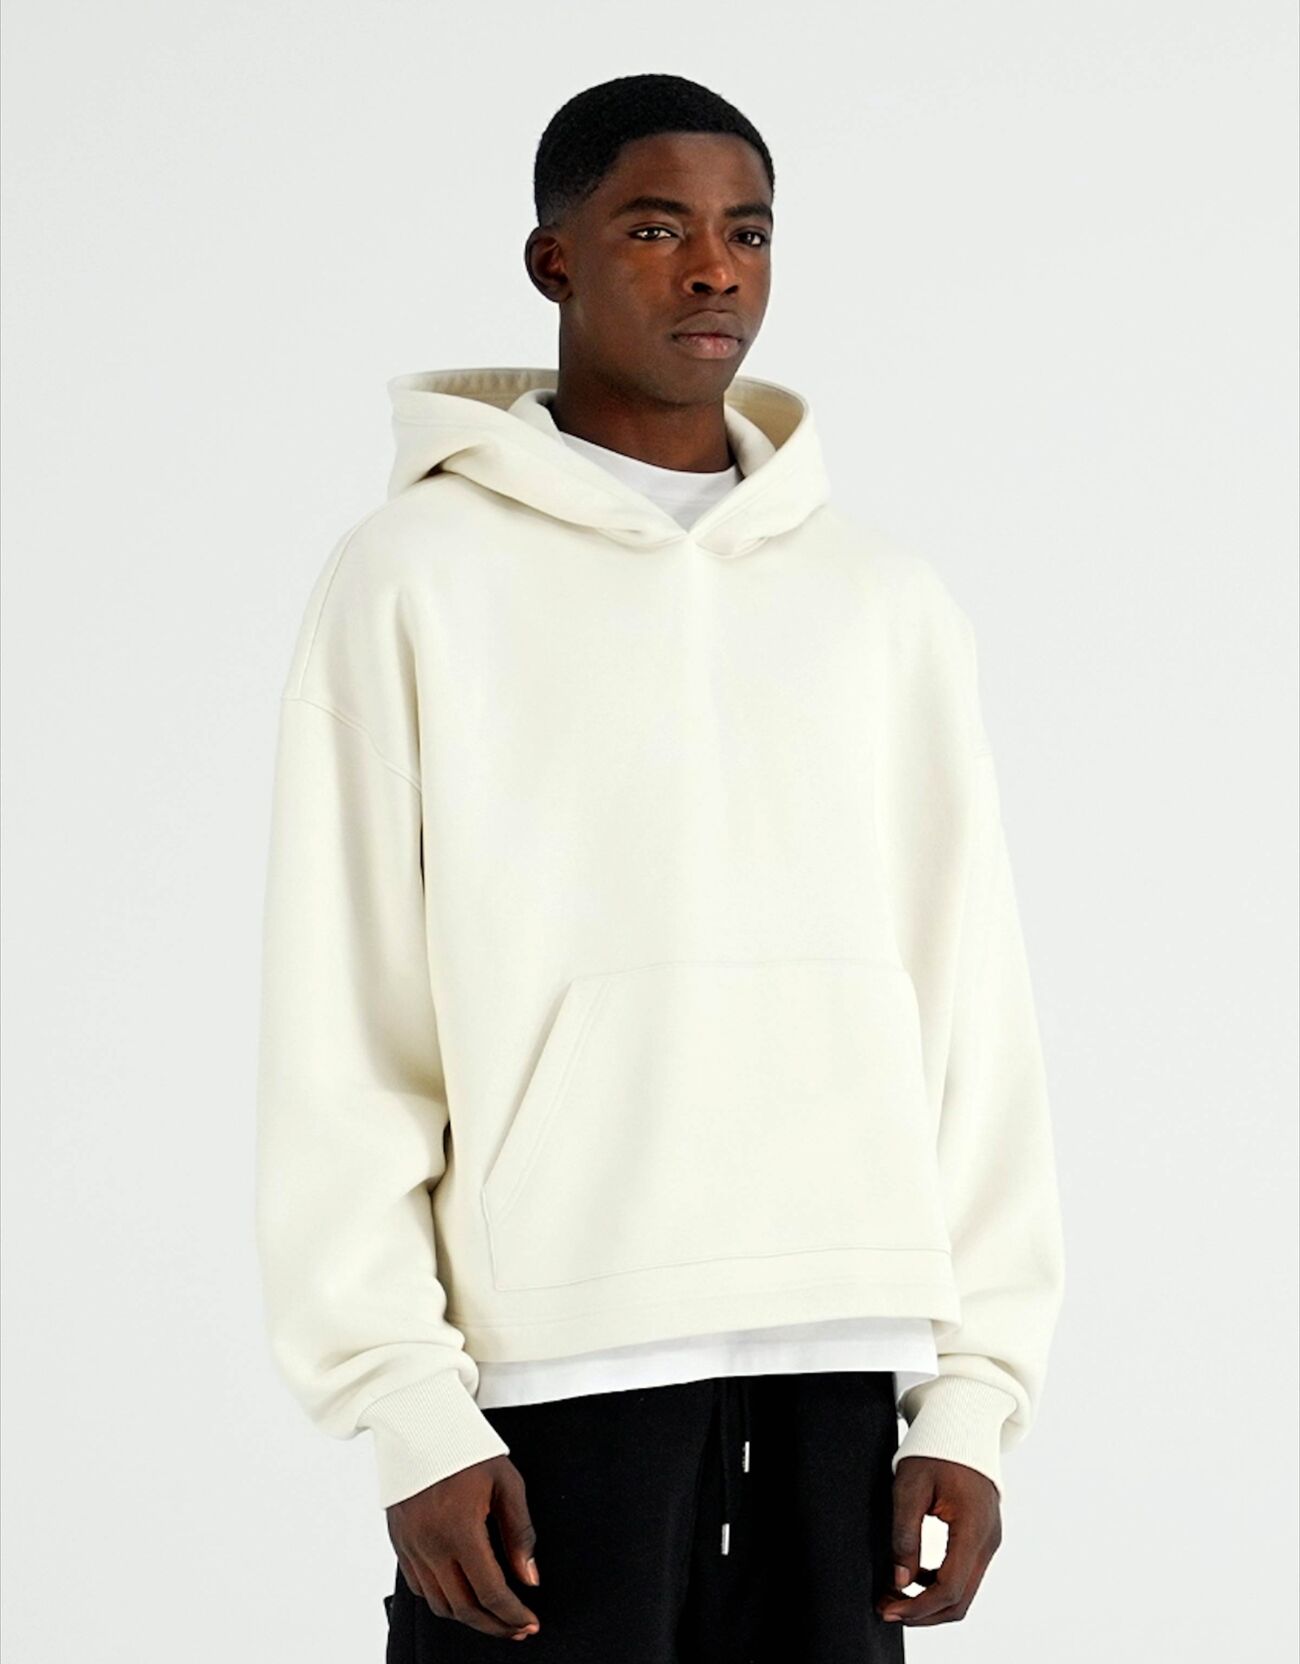 White %26 Sweatshirts & Hoodies for Sale